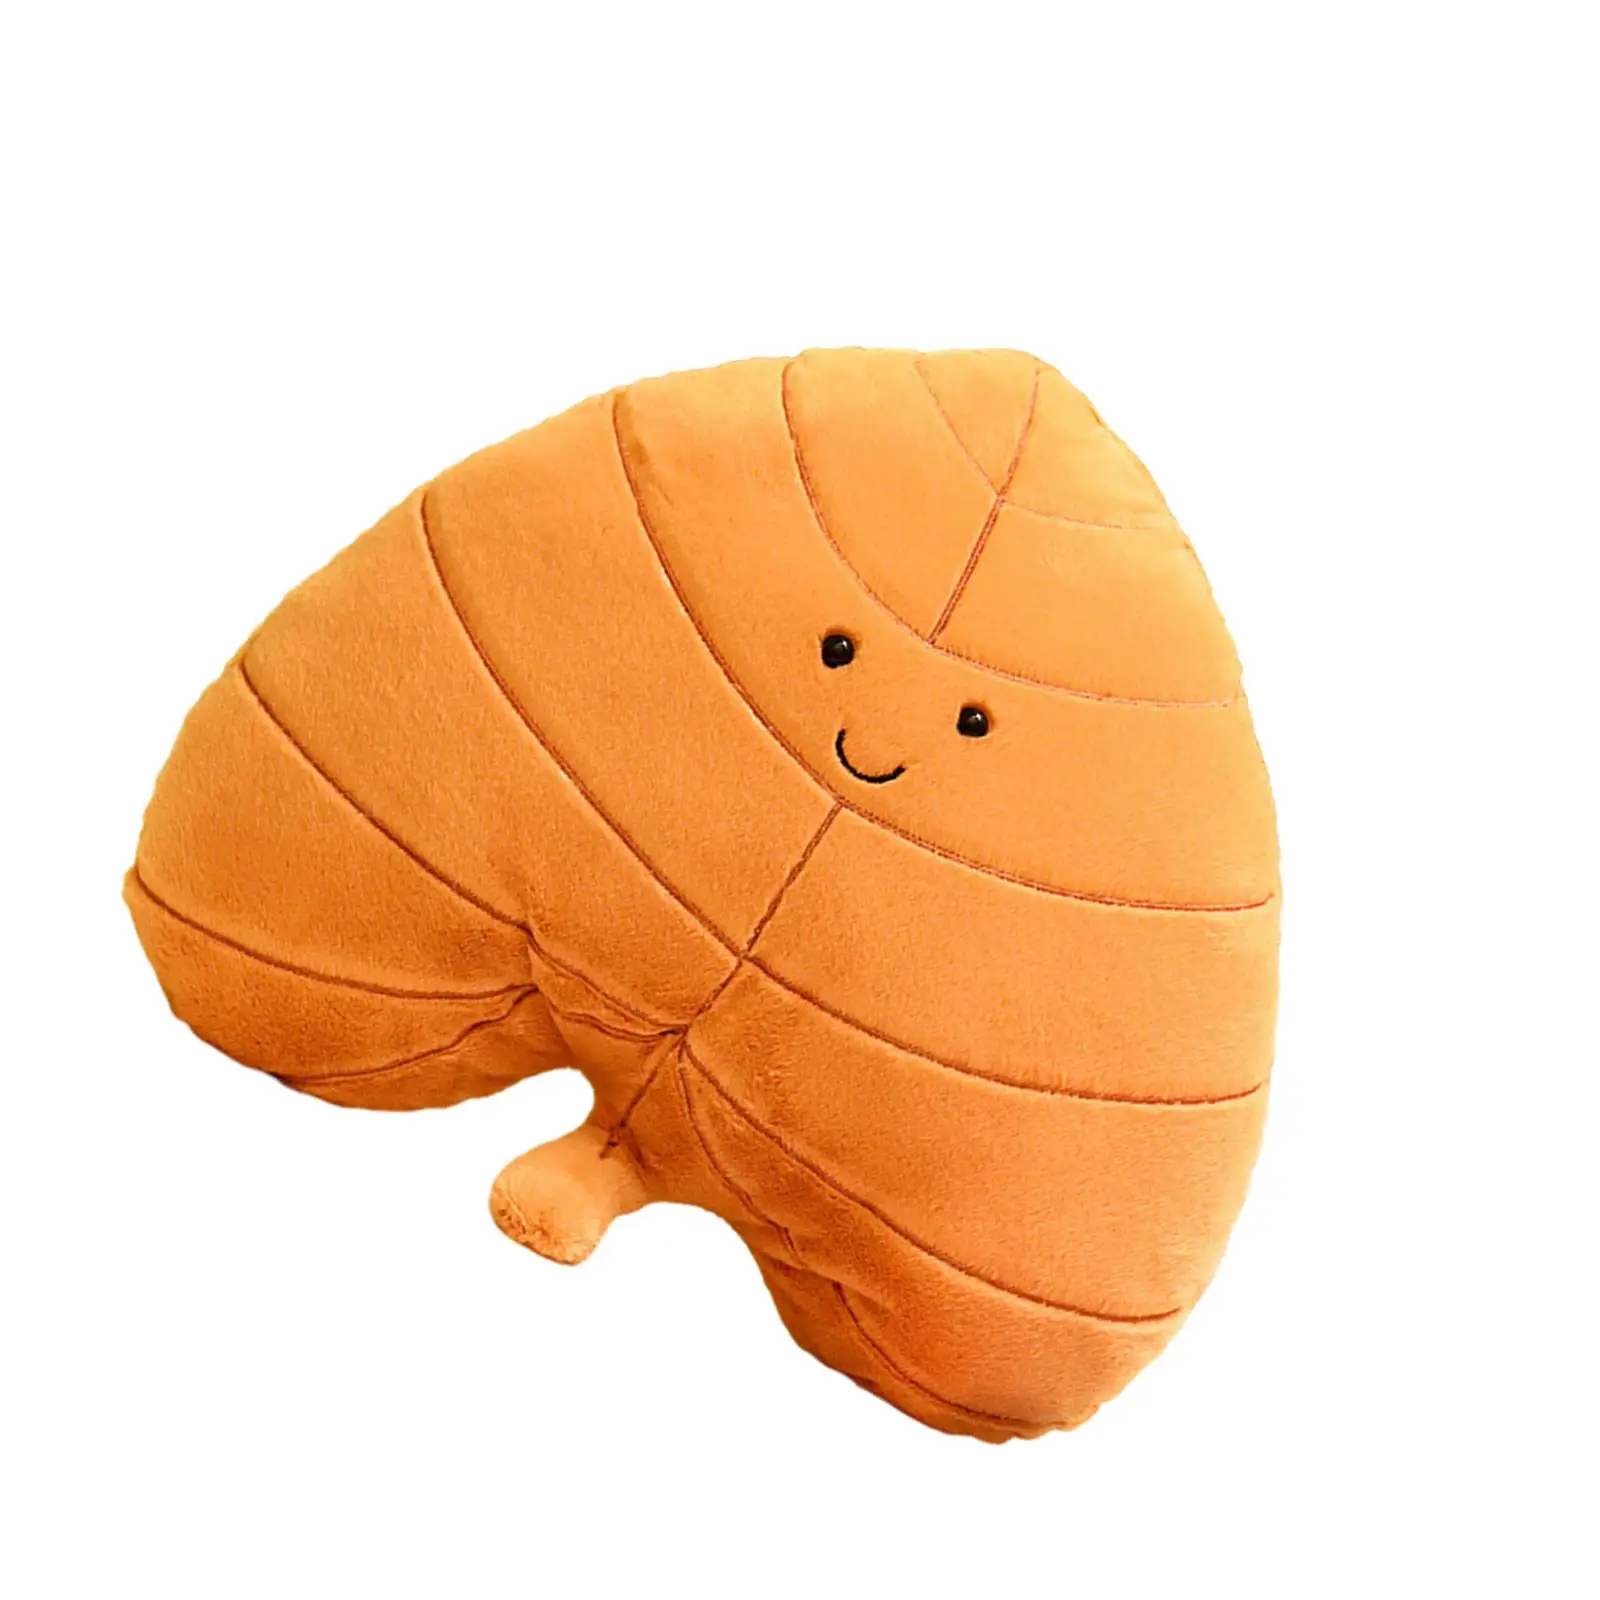 3D Leaf Plush Pillow Housewarming Gift Ornament for Living Room Office Sofa